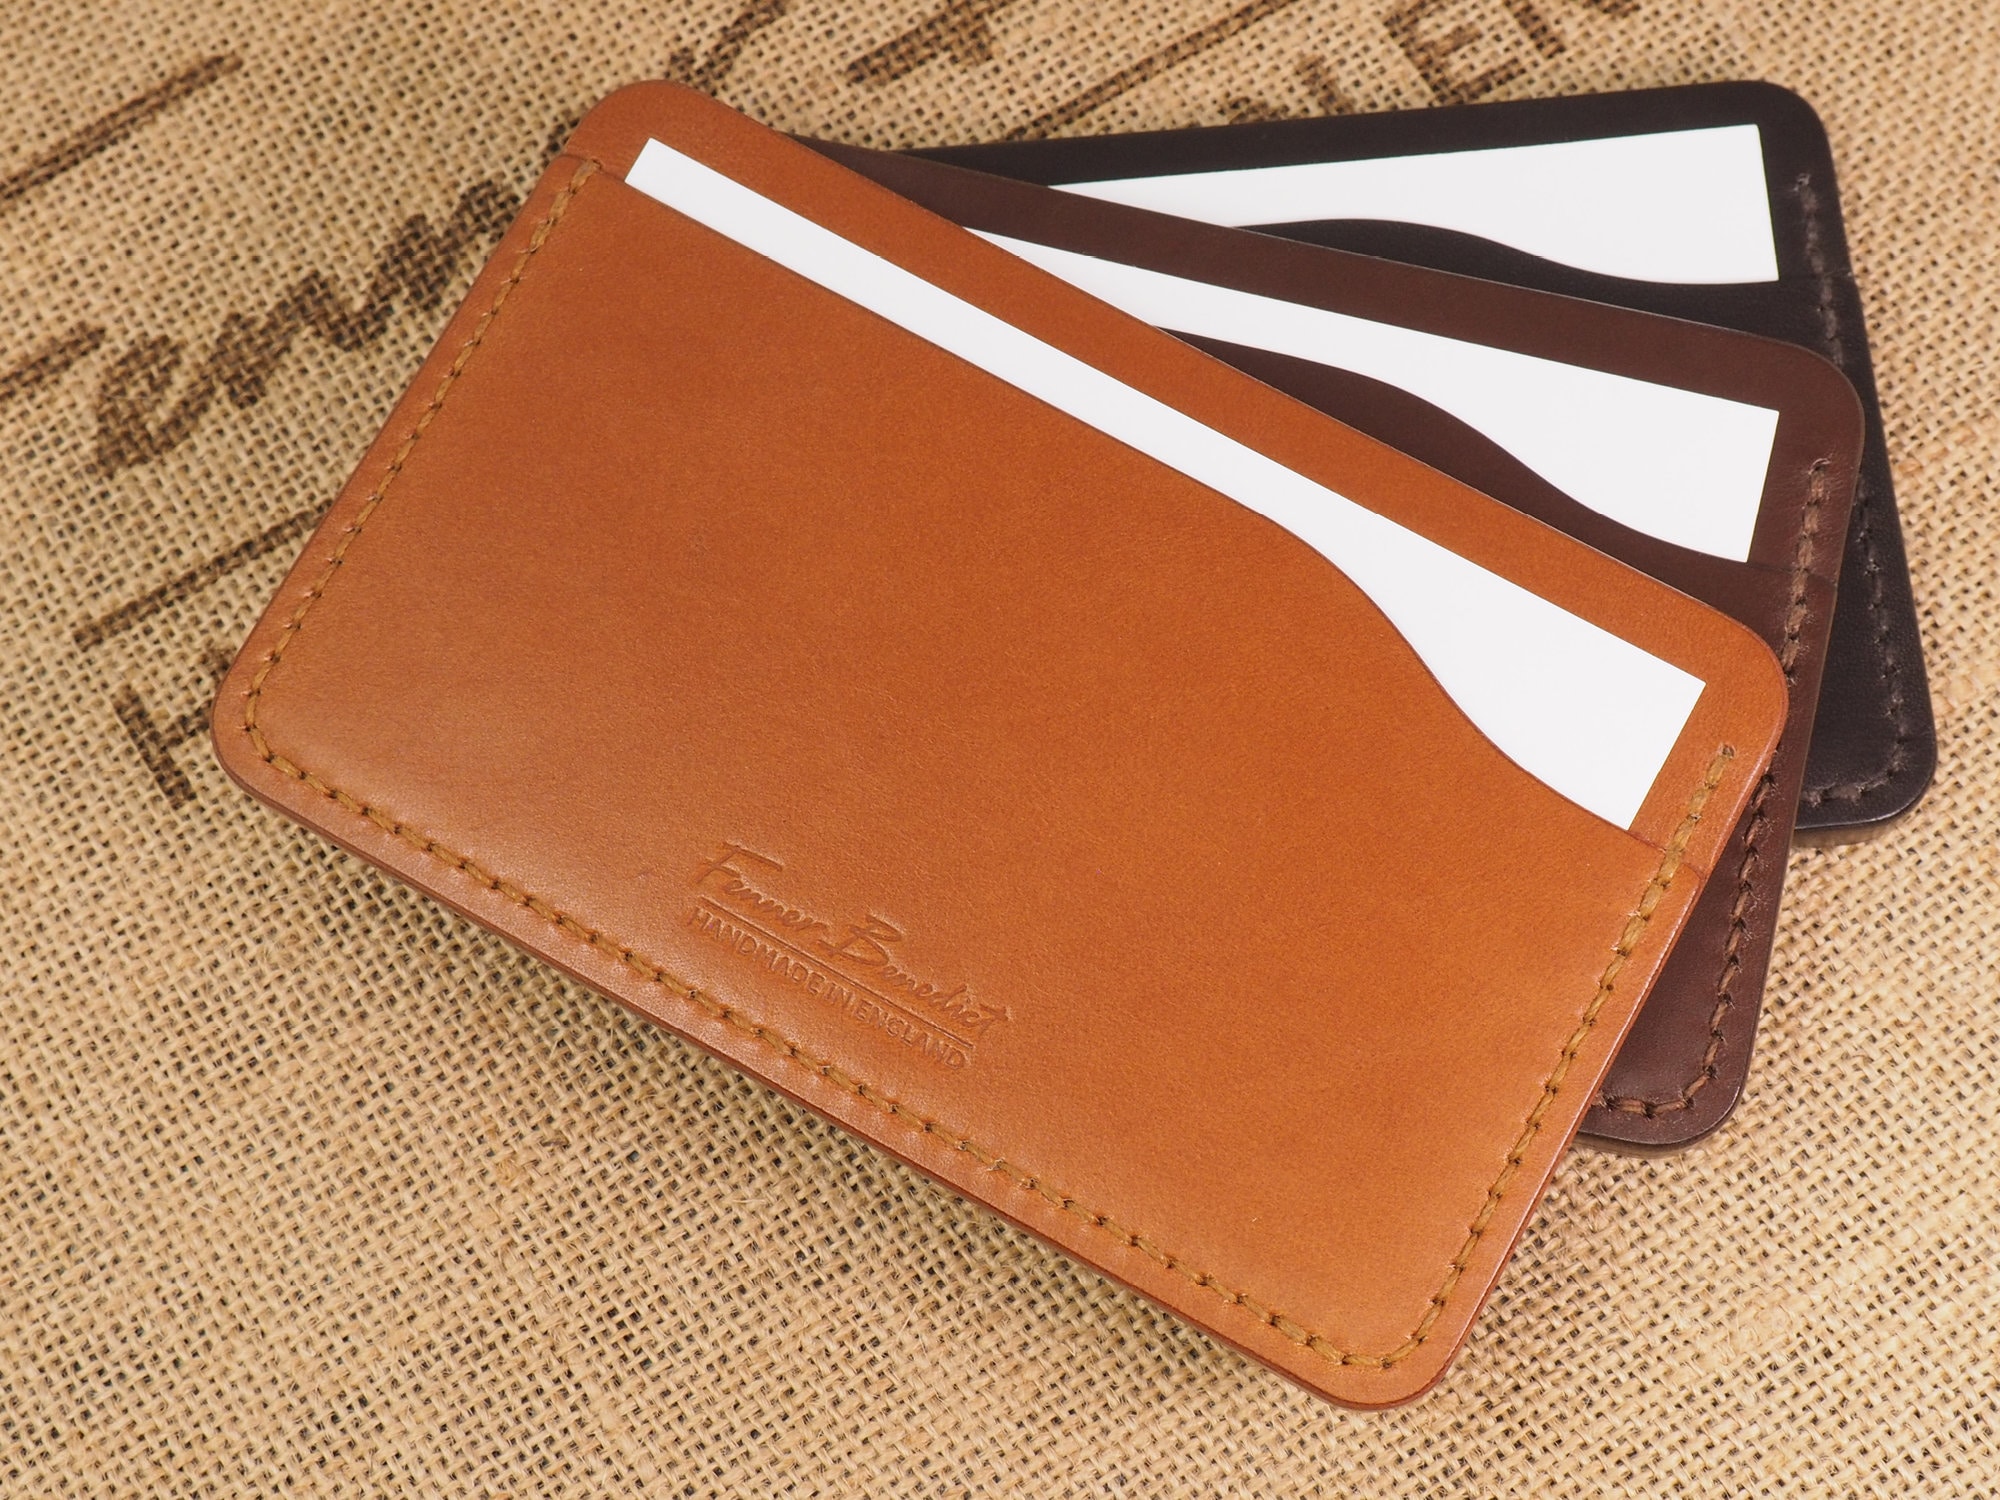 SWISST slimline Italian leather AirTag wallet NEW